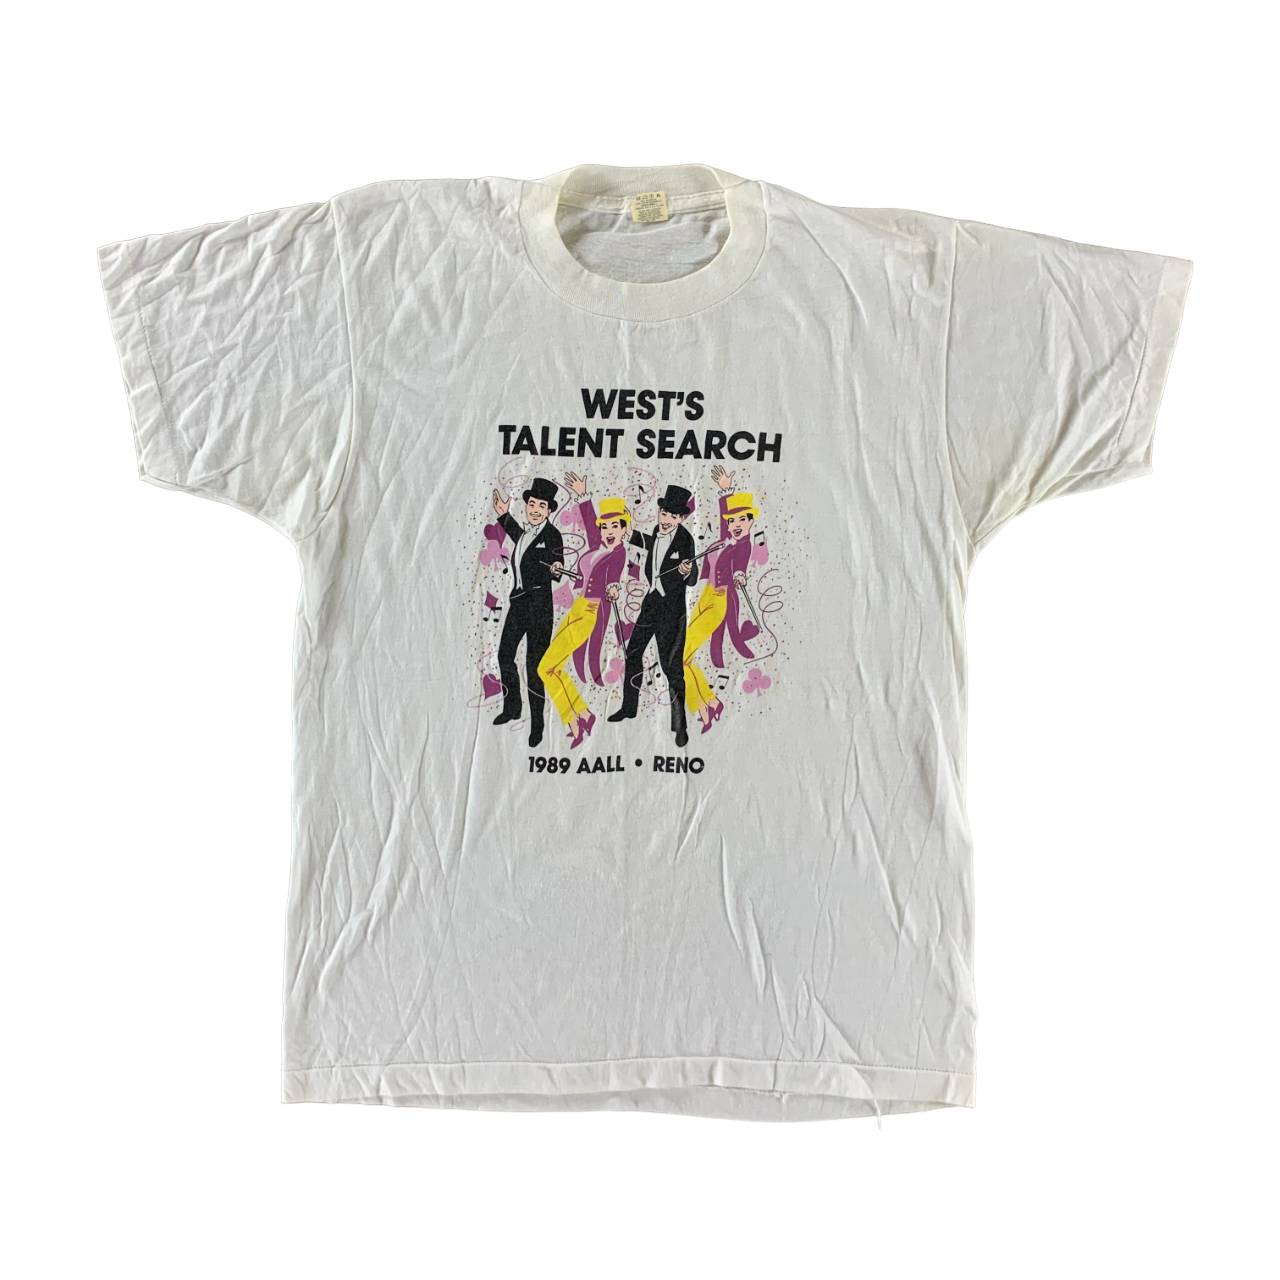 Vintage 1989 Reno Talent Show T-shirt size XL